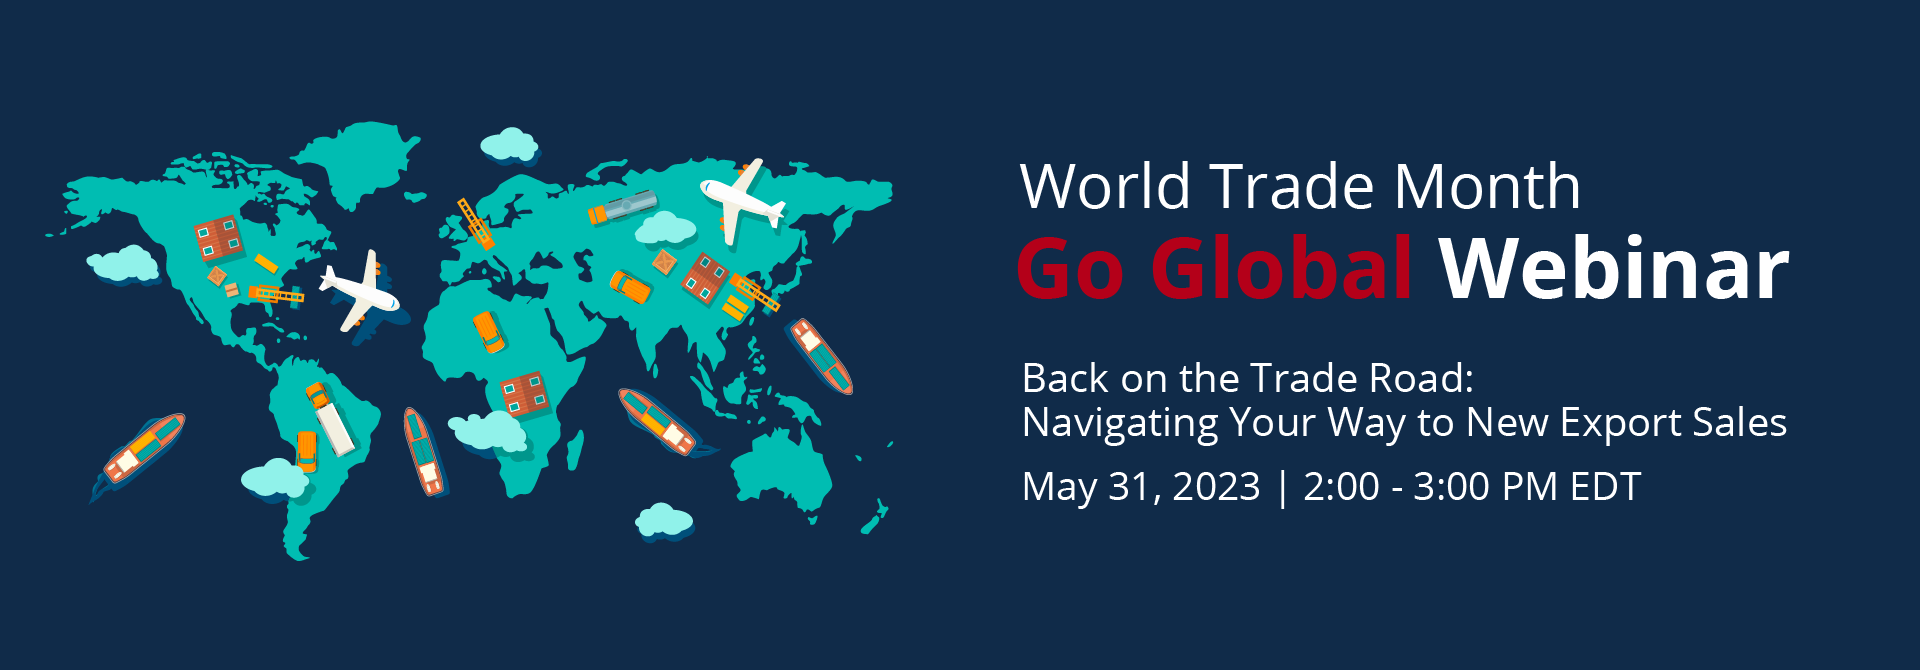 World Trade Month Webinar 2023 Banner